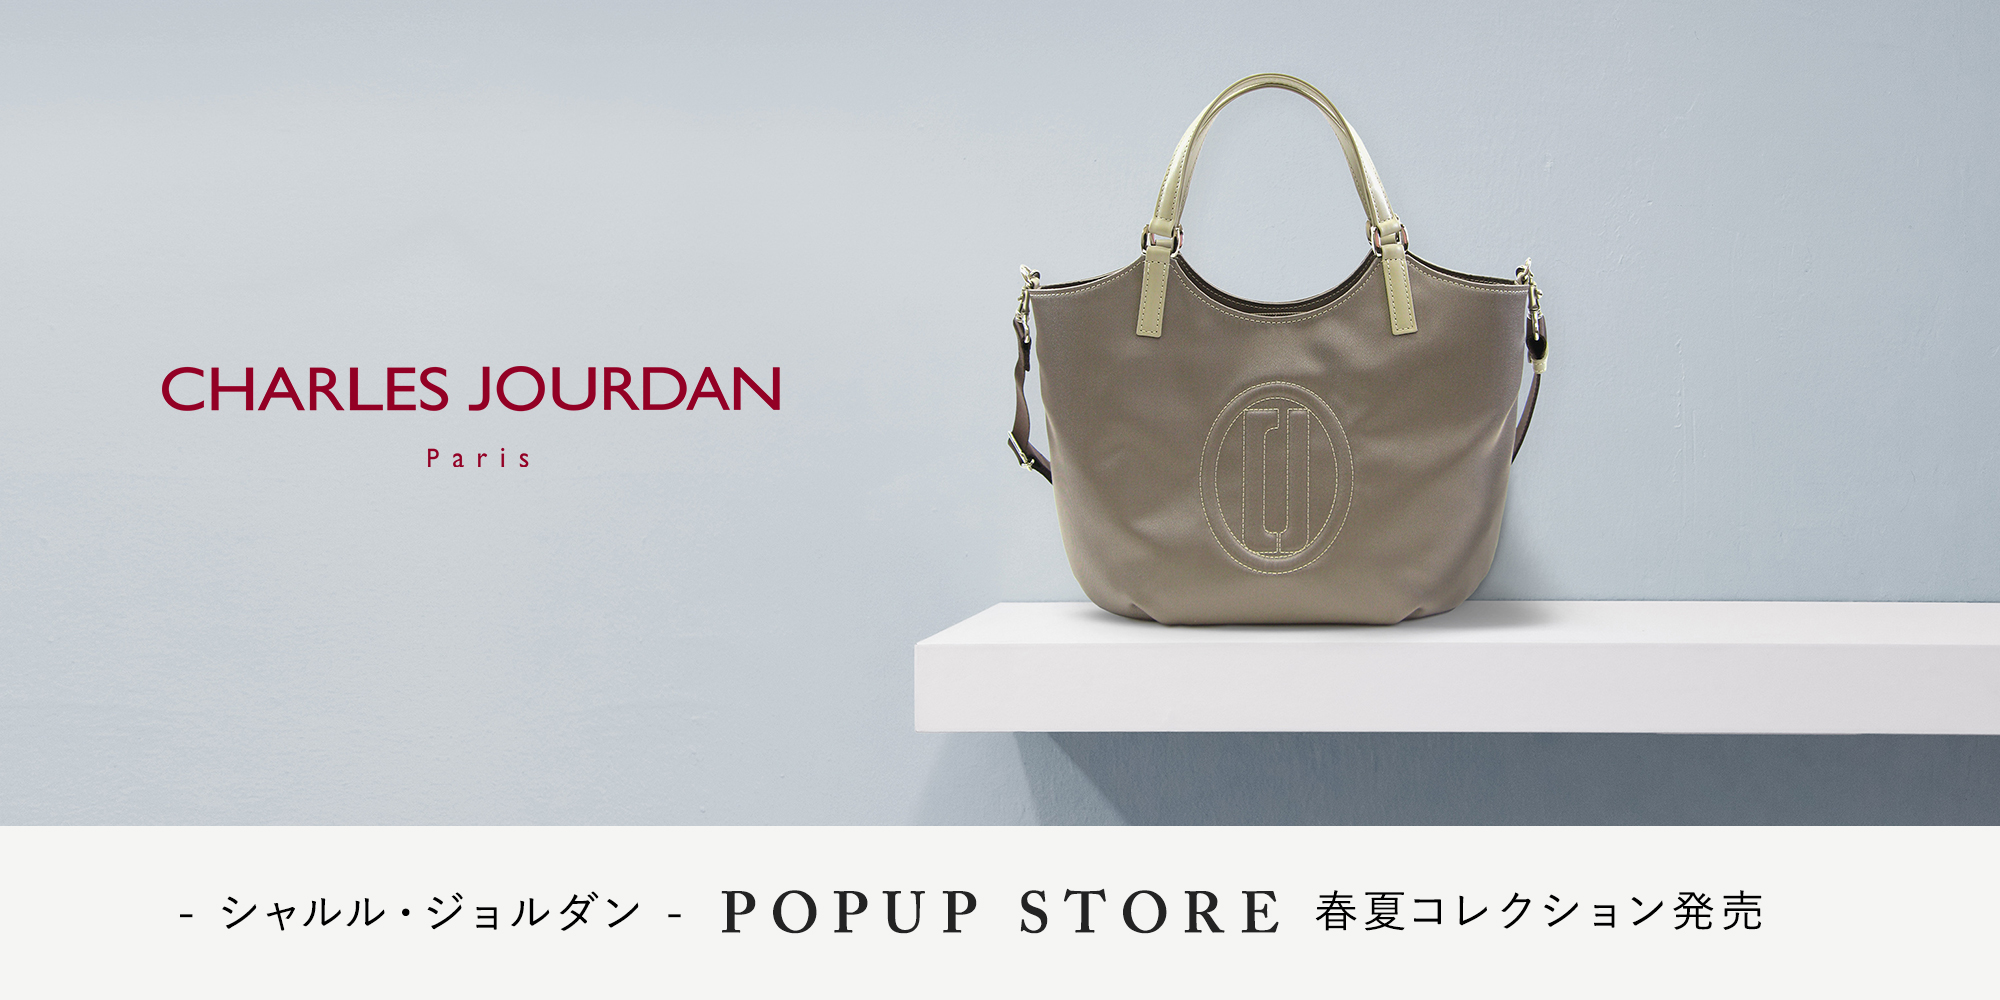 Charles Jourdan Popup Store シャルル ジョルダン Leilian Co Ltd Official Online Store